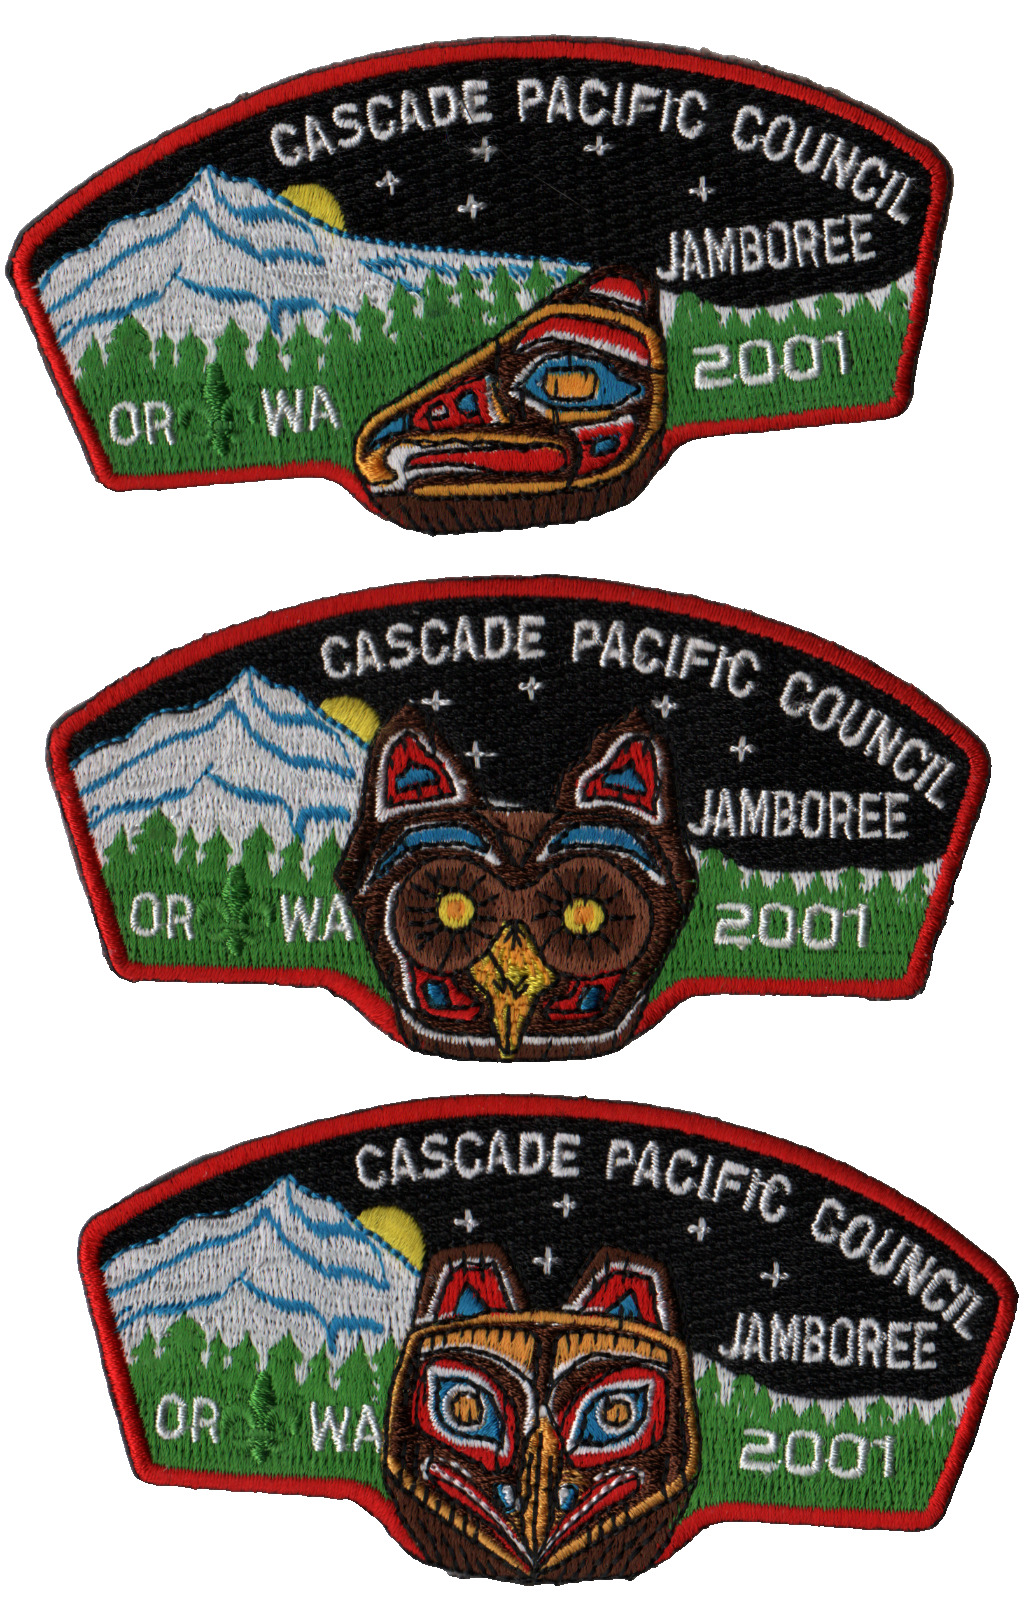 2001 Jamboree Cascade Pacidic Council Set of 3 JSP Red Bdr (AR892)